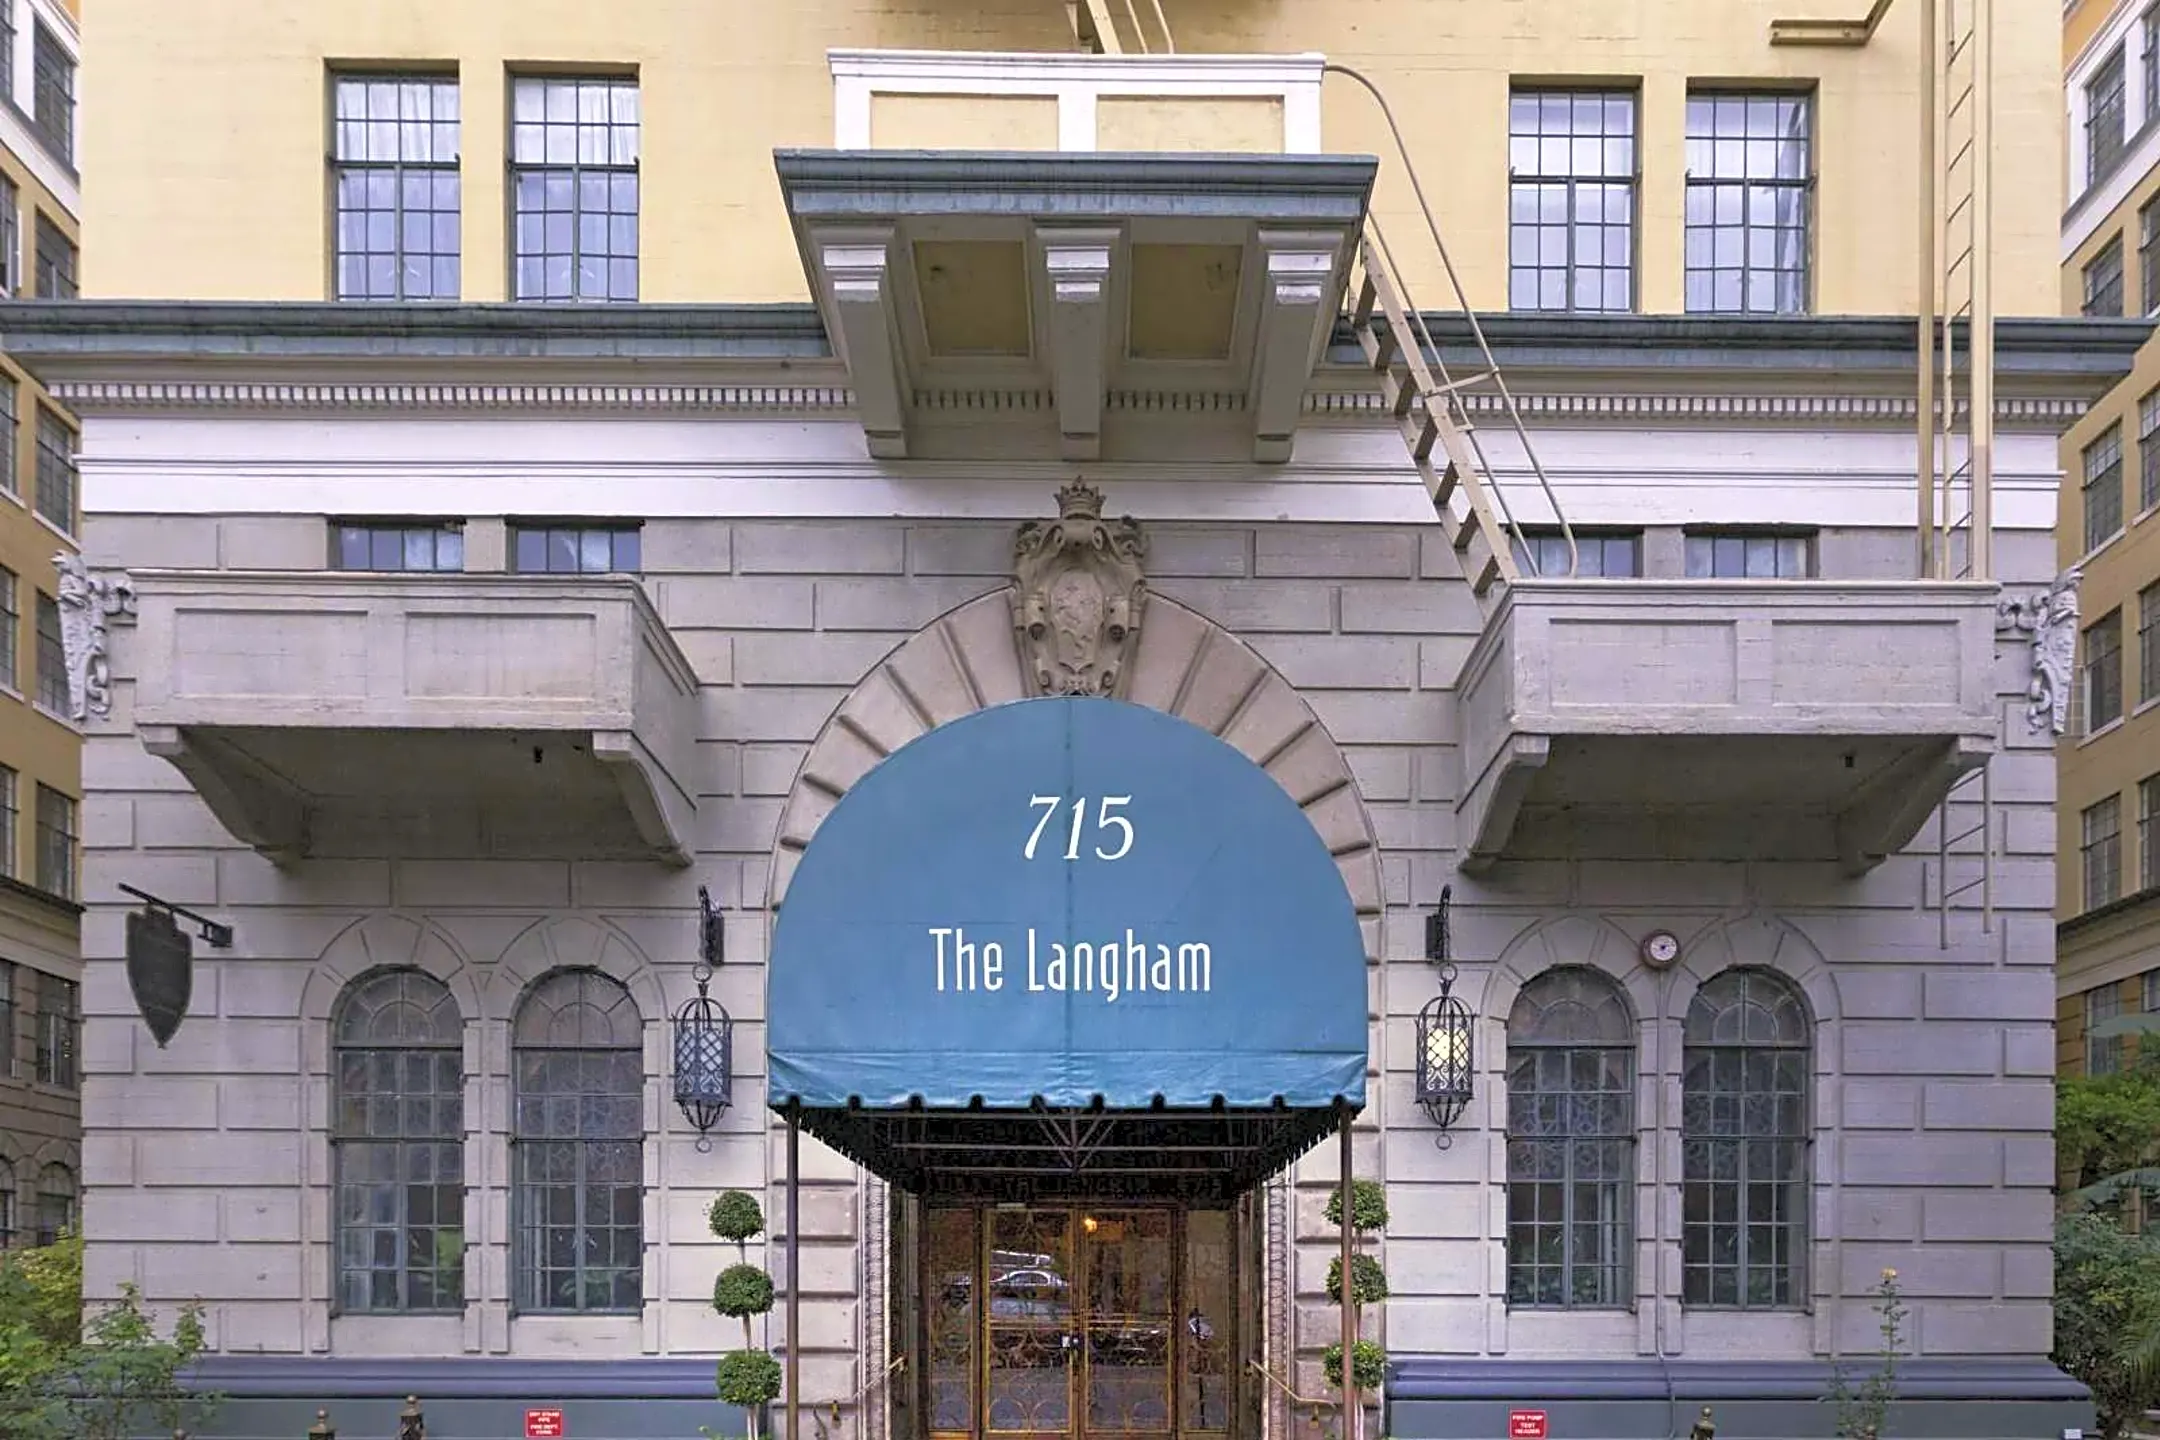 Building - The Langham Apartments - Los Angeles, CA